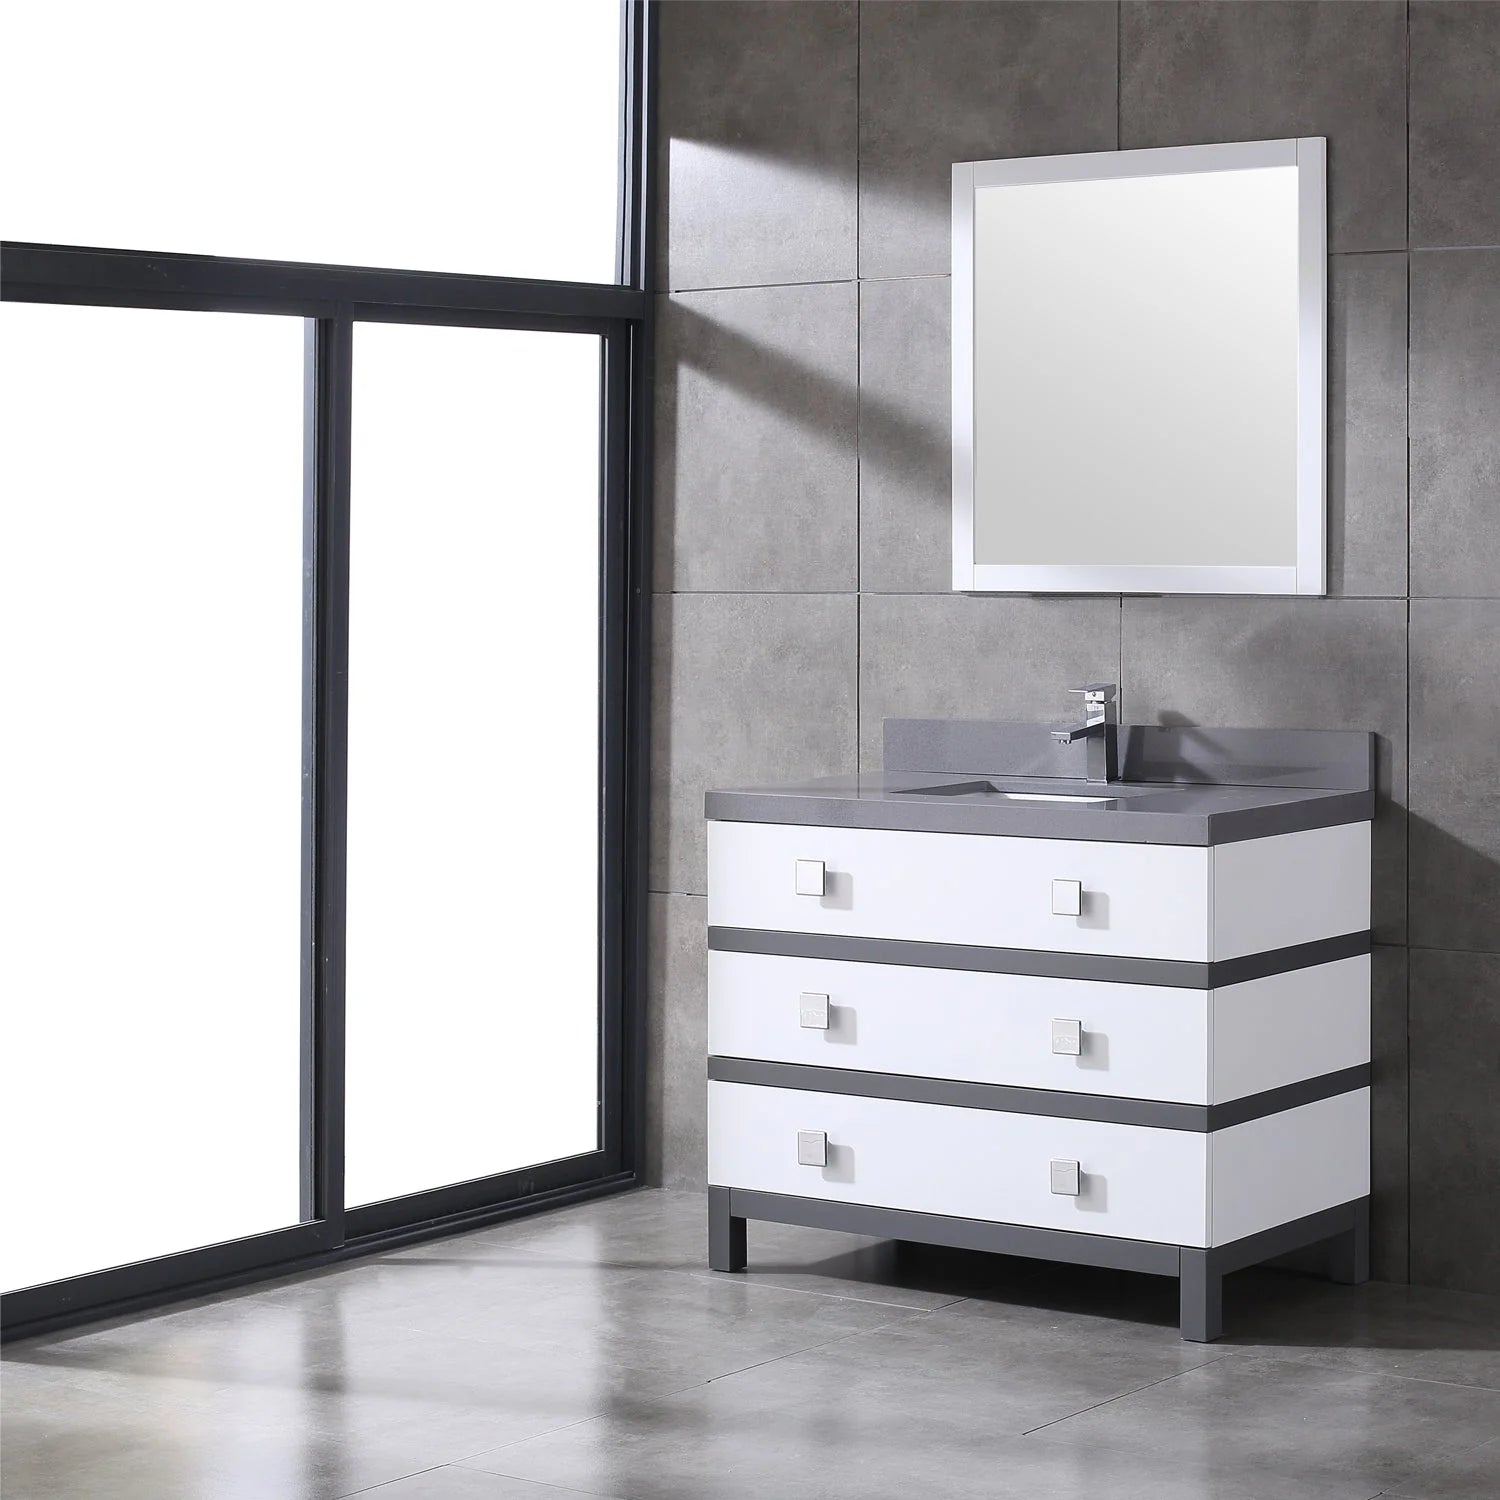 Eviva Sydney 42 Inch Bathroom Vanity with Solid Quartz Countertop - Bathroom Design Center